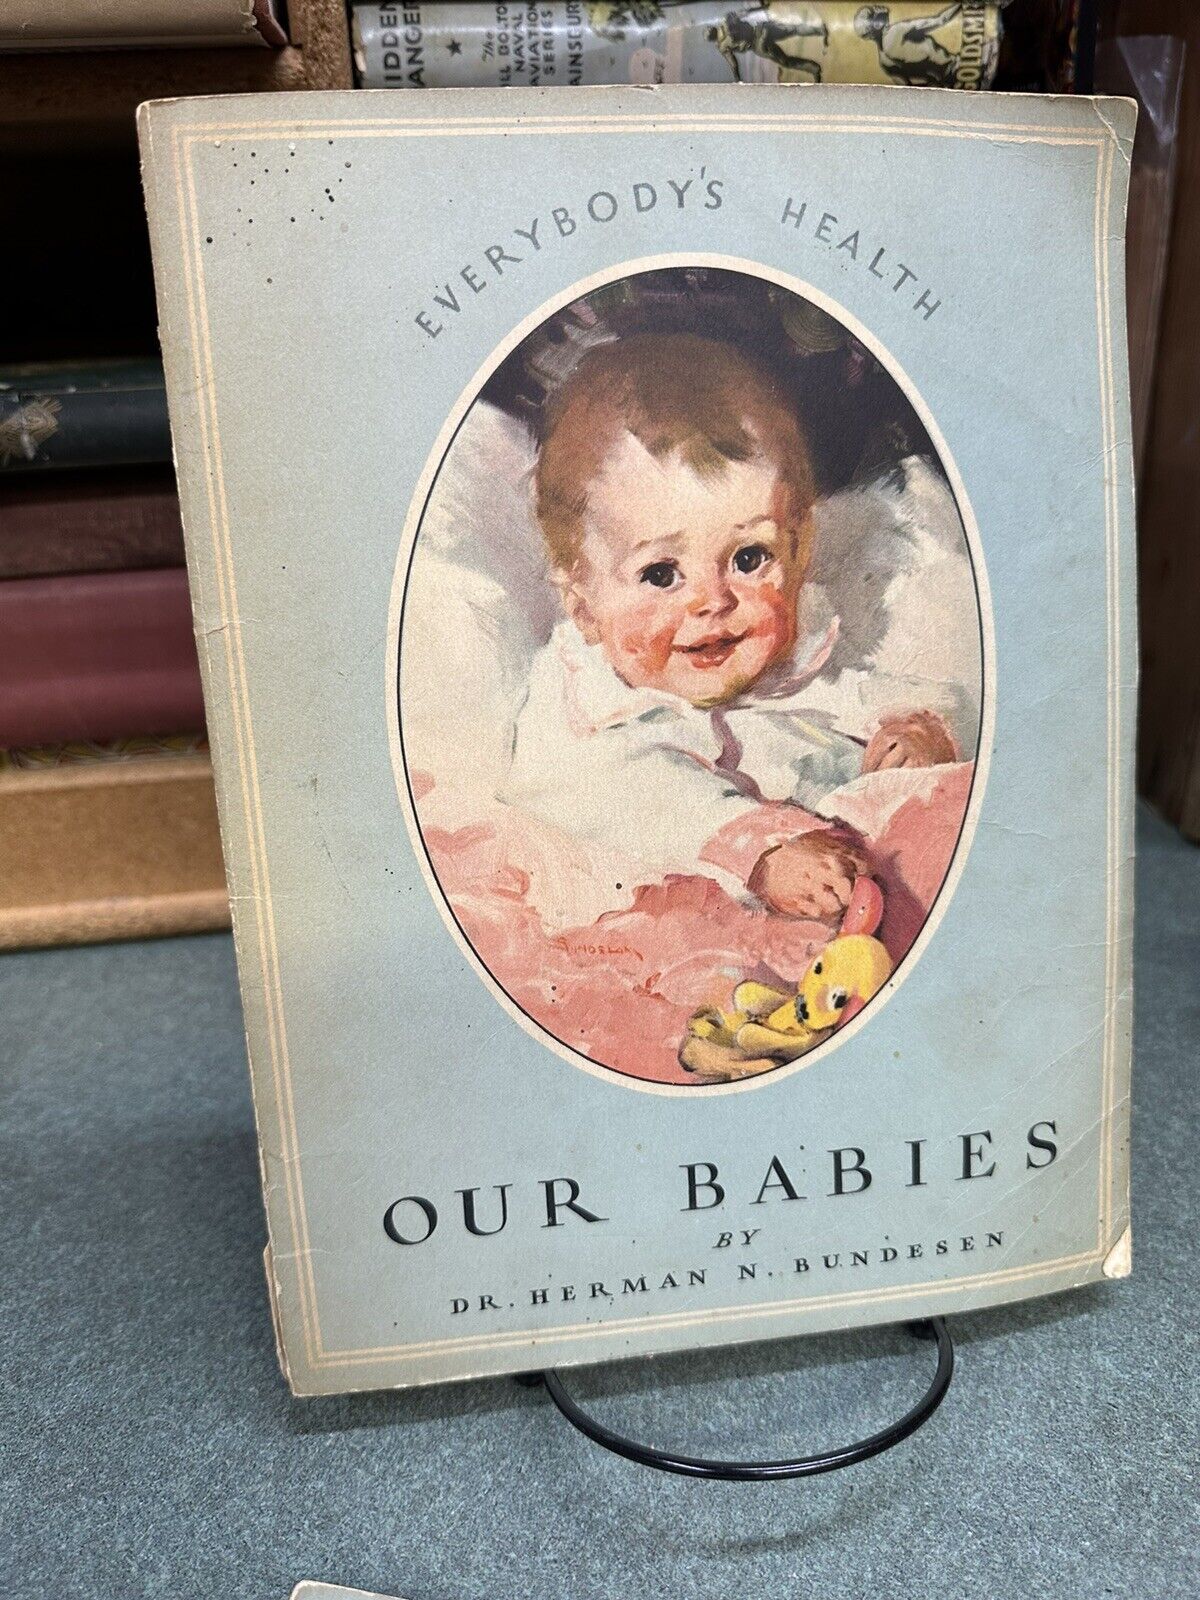 1930 Everybody's Health OUR BABIES Herman Bundesen Vintage Baby Care Booklet